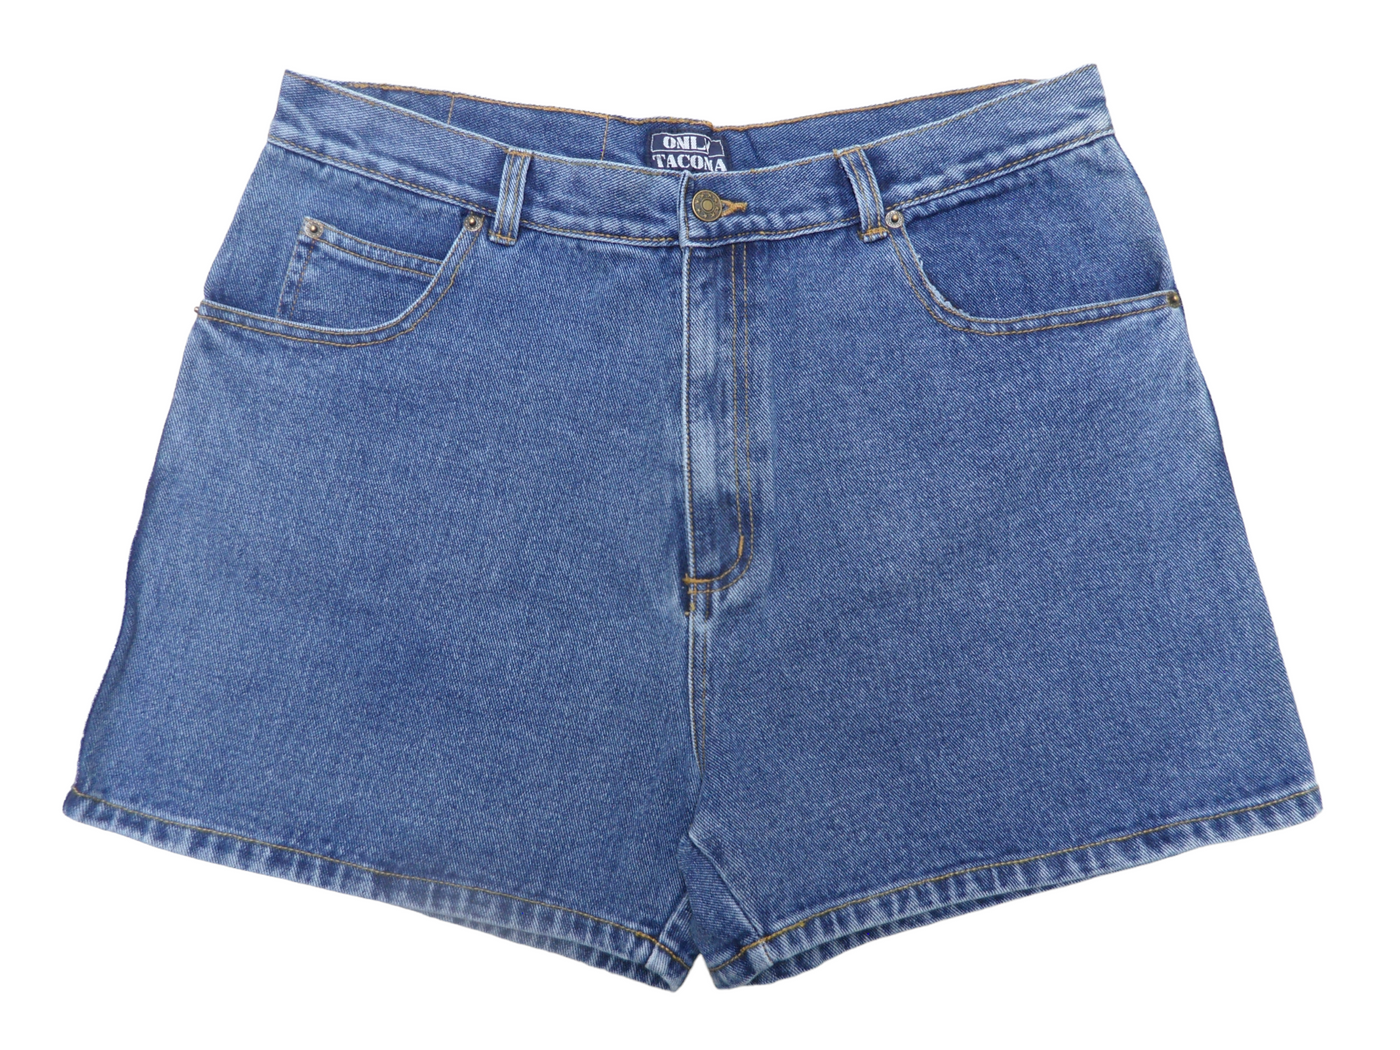 Vintage Only Tacoma Mid Blue Denim Women's Shorts Size - XL (18/20 AU)